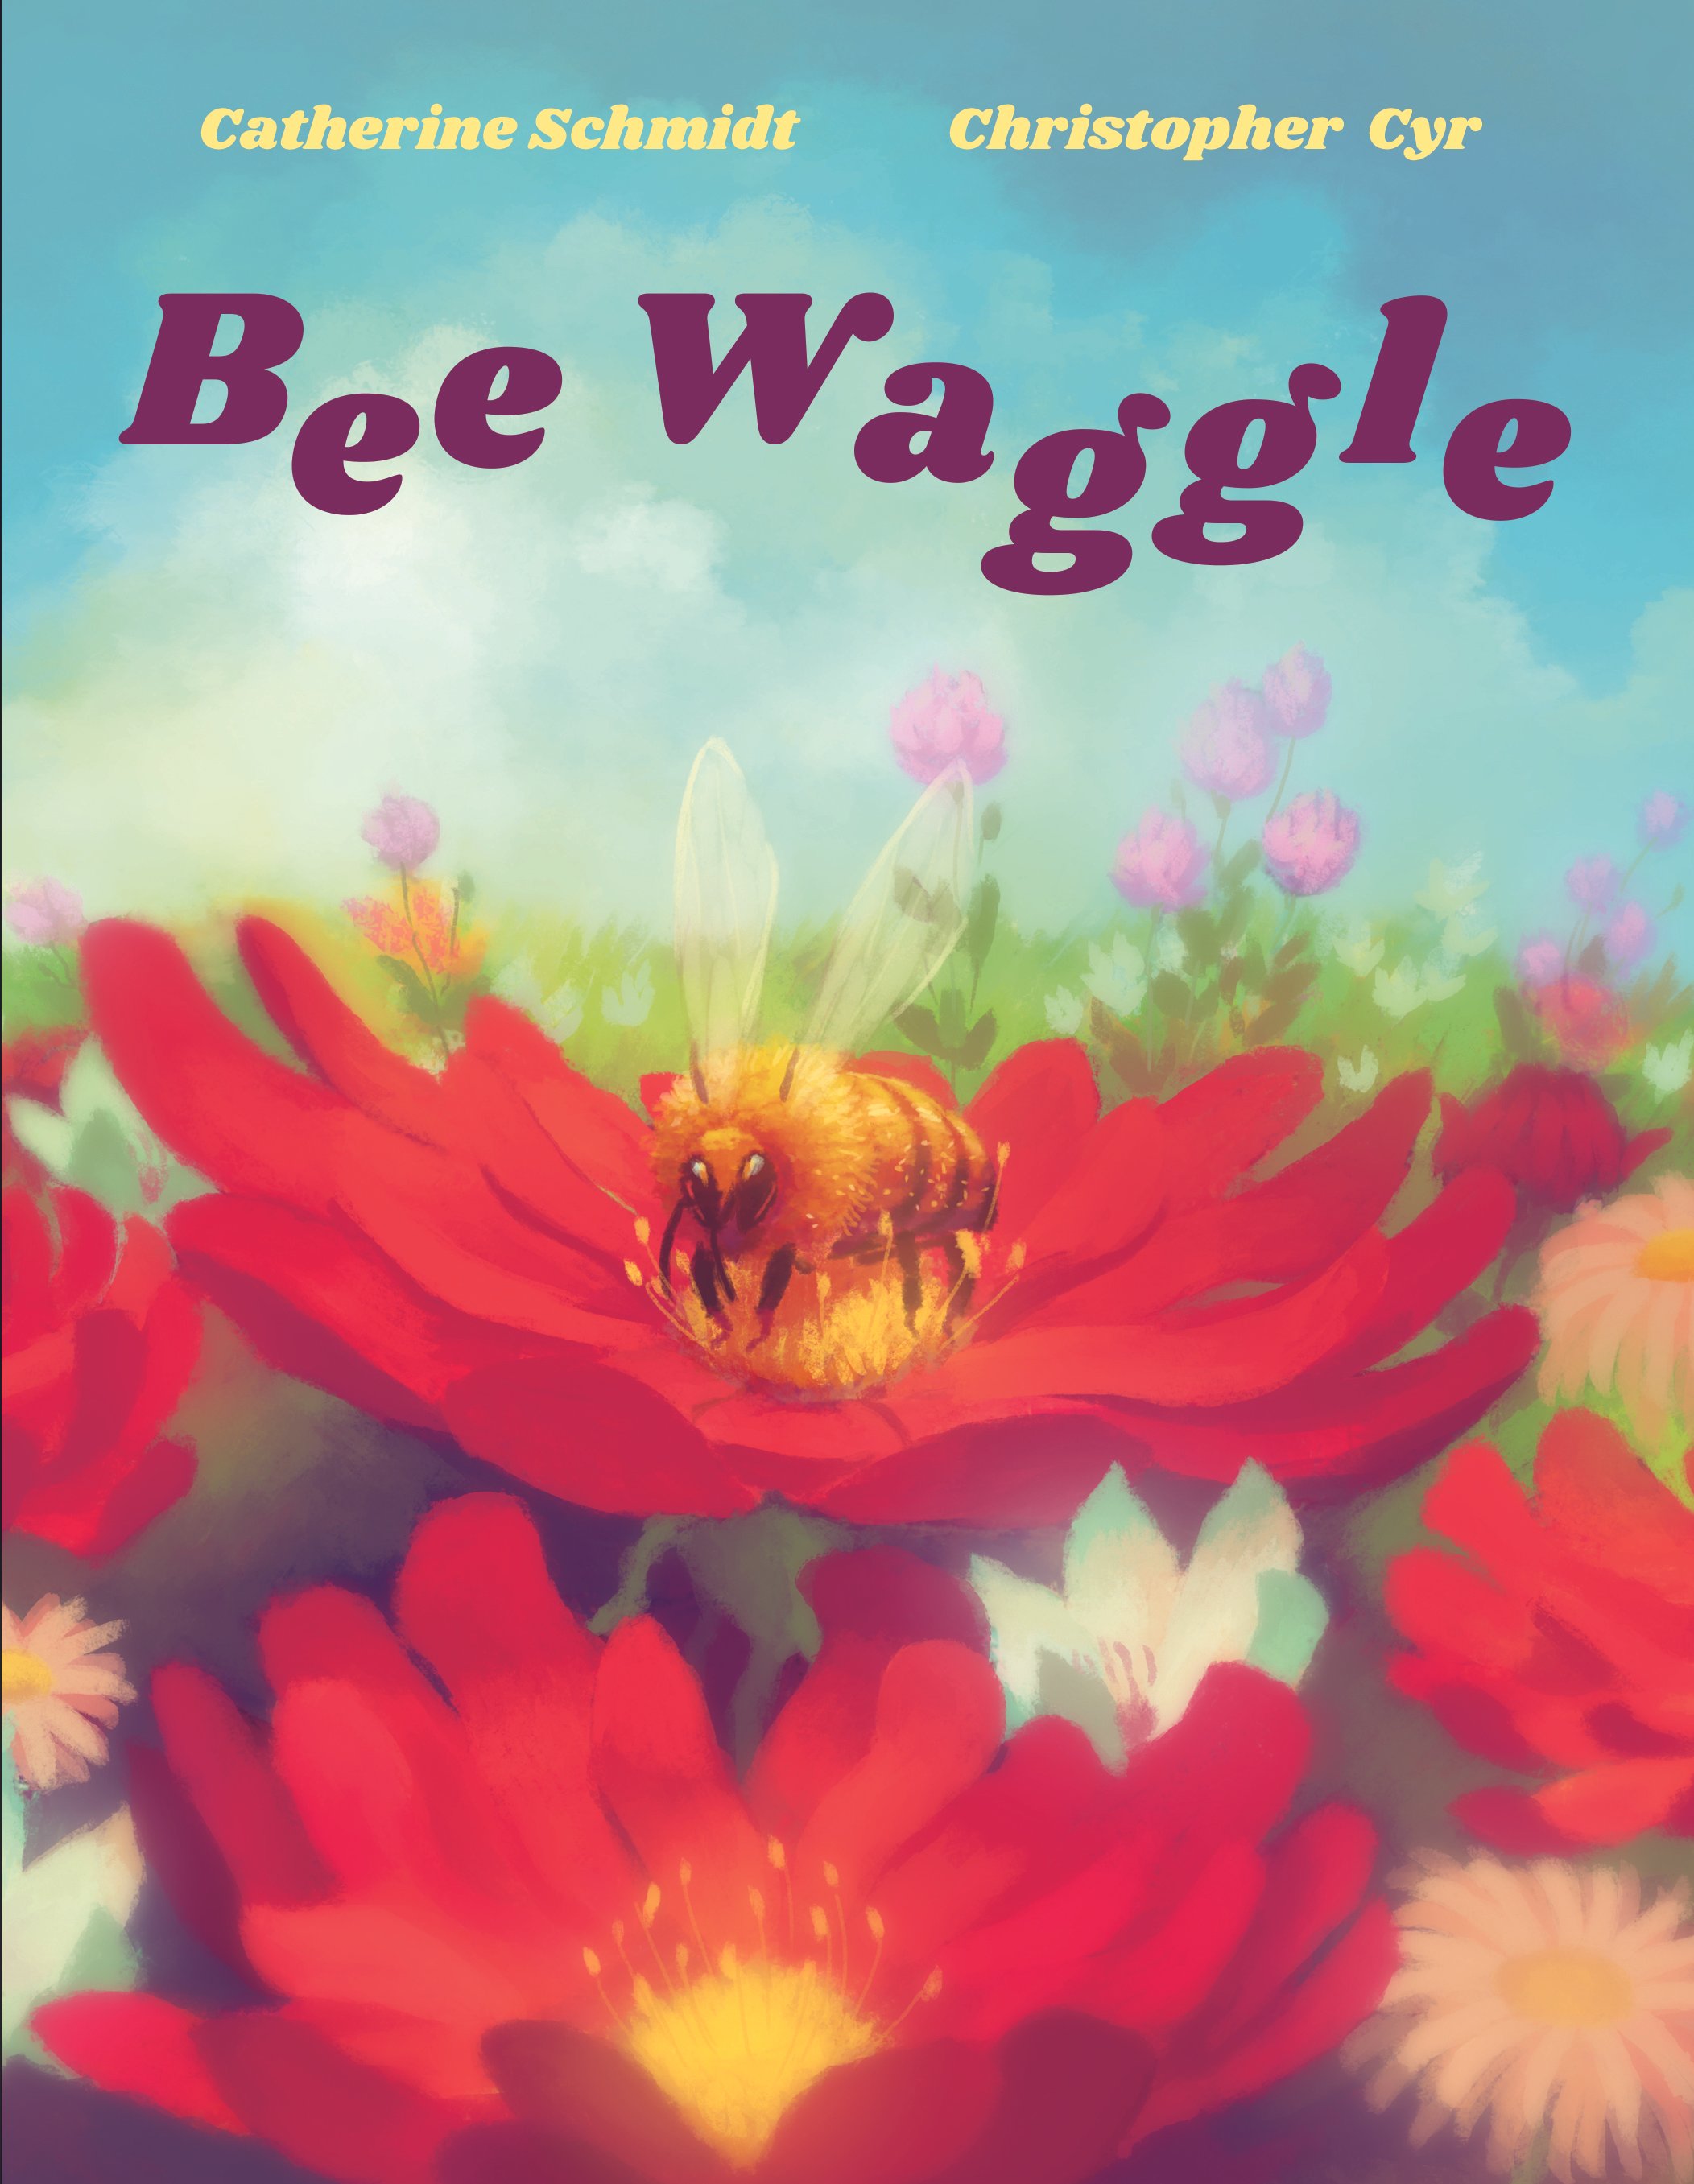 Bee Waggle cover.jpg